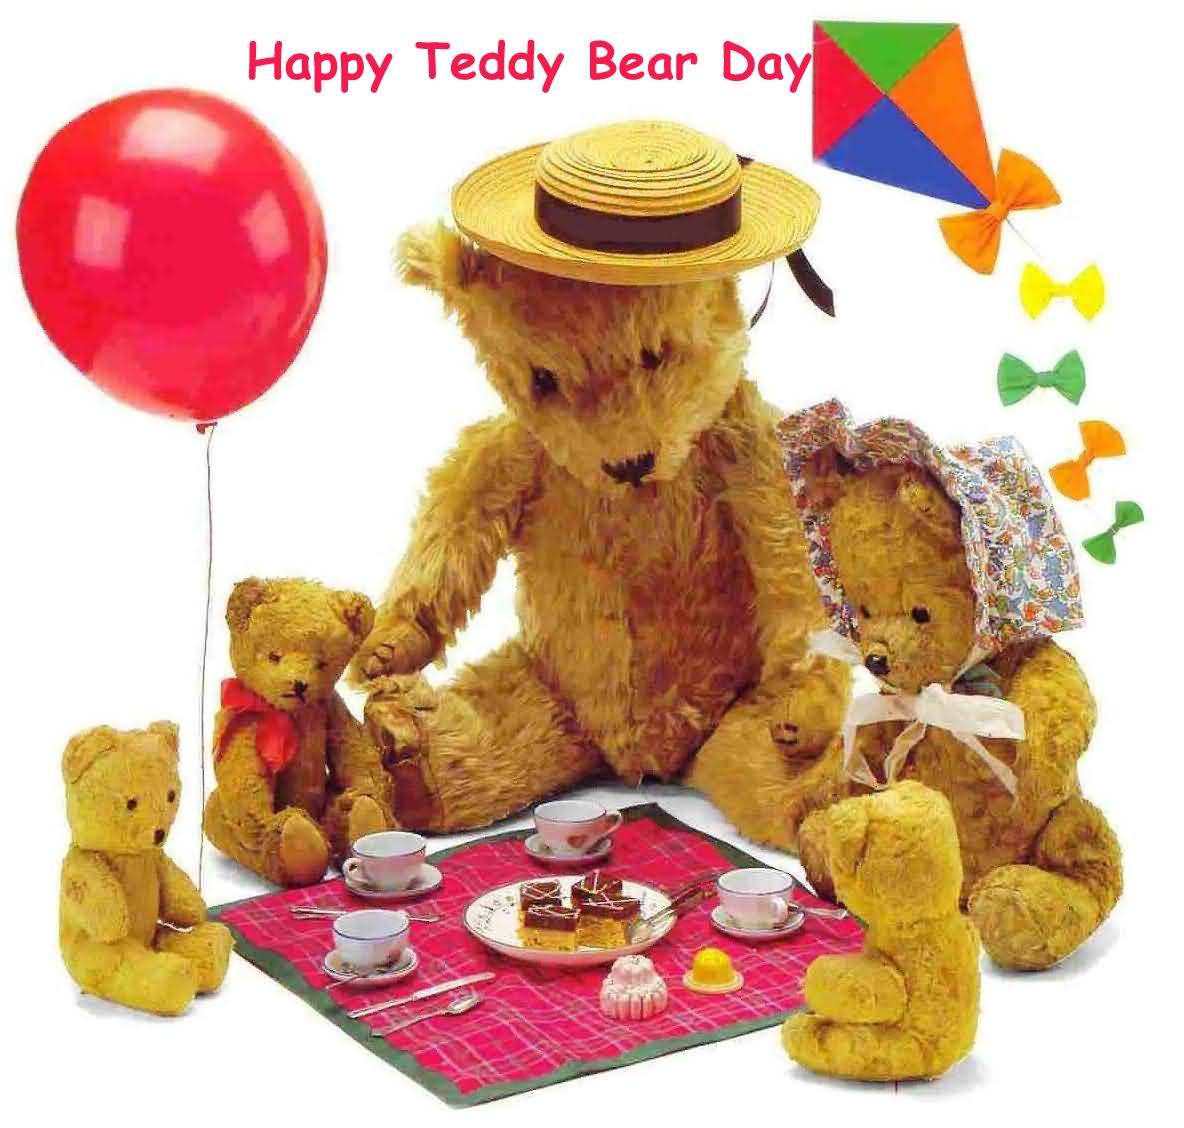 Happy Teddy bear day teddy bear family on picnic